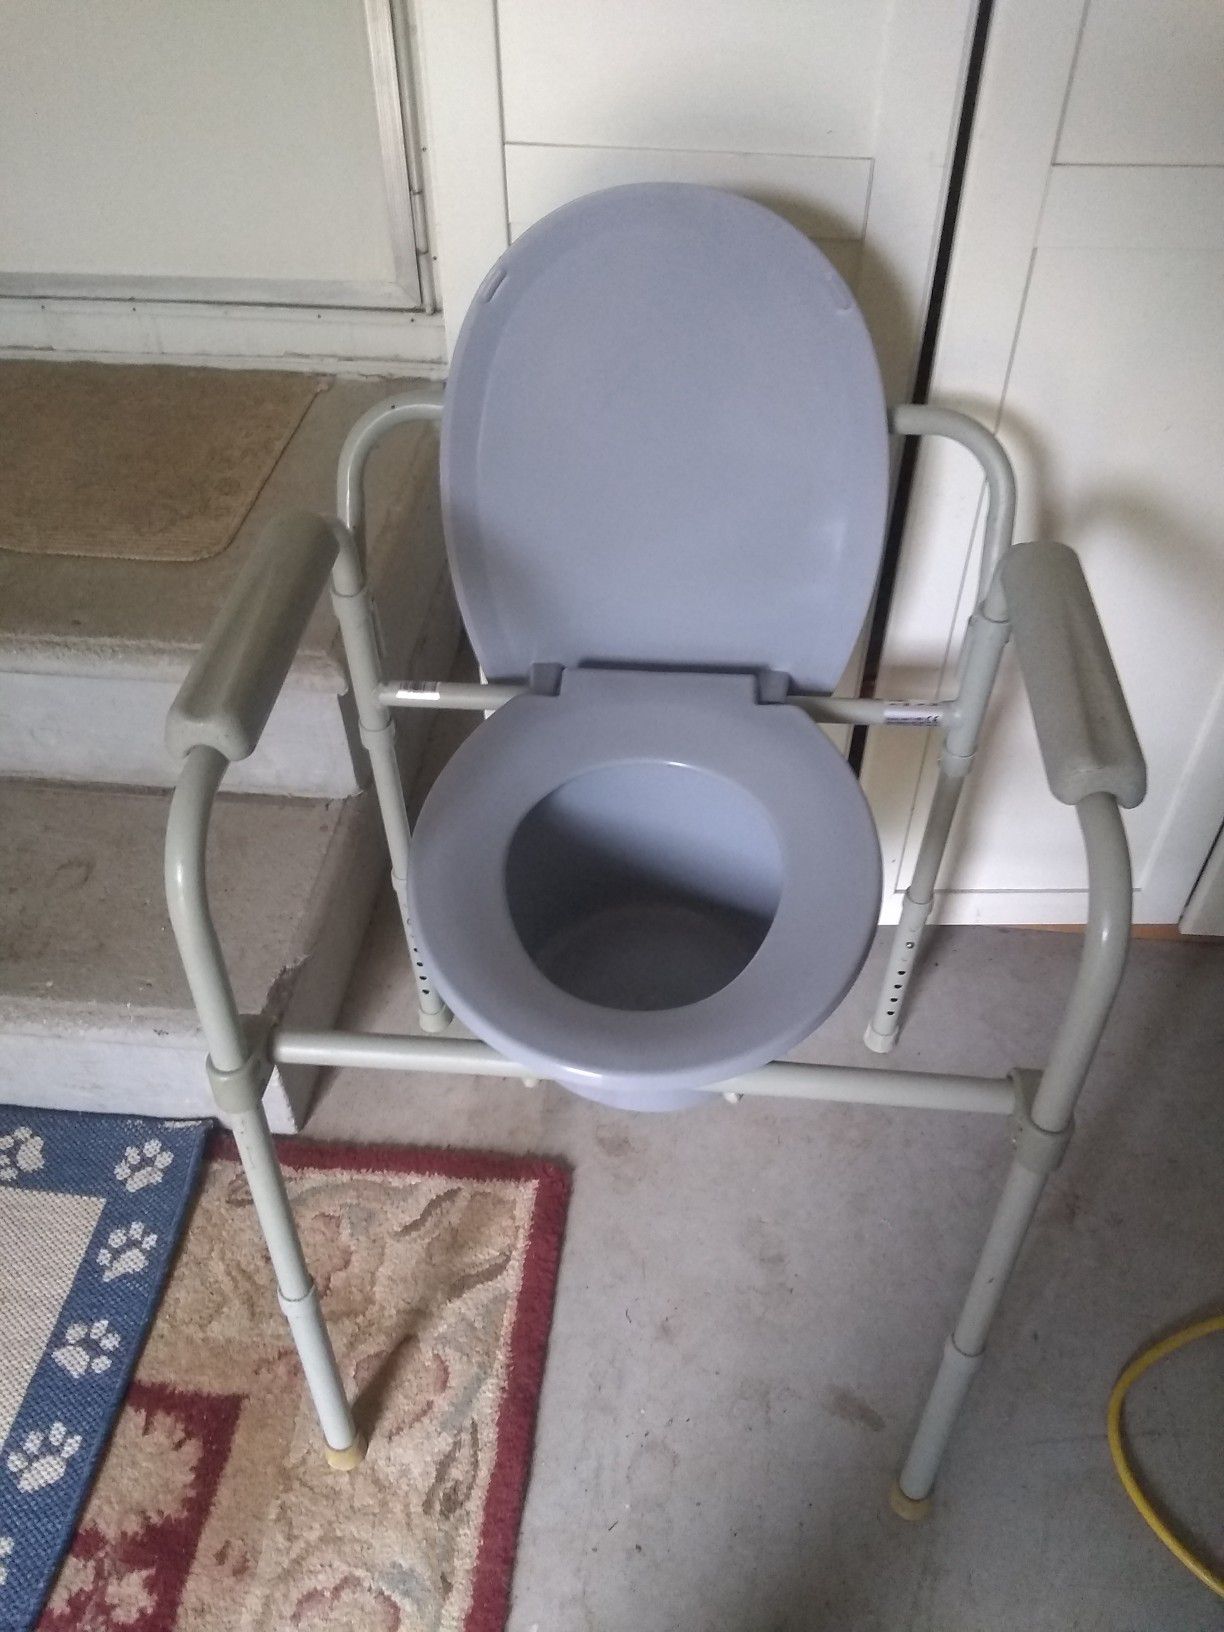 Handicap toilet, not used